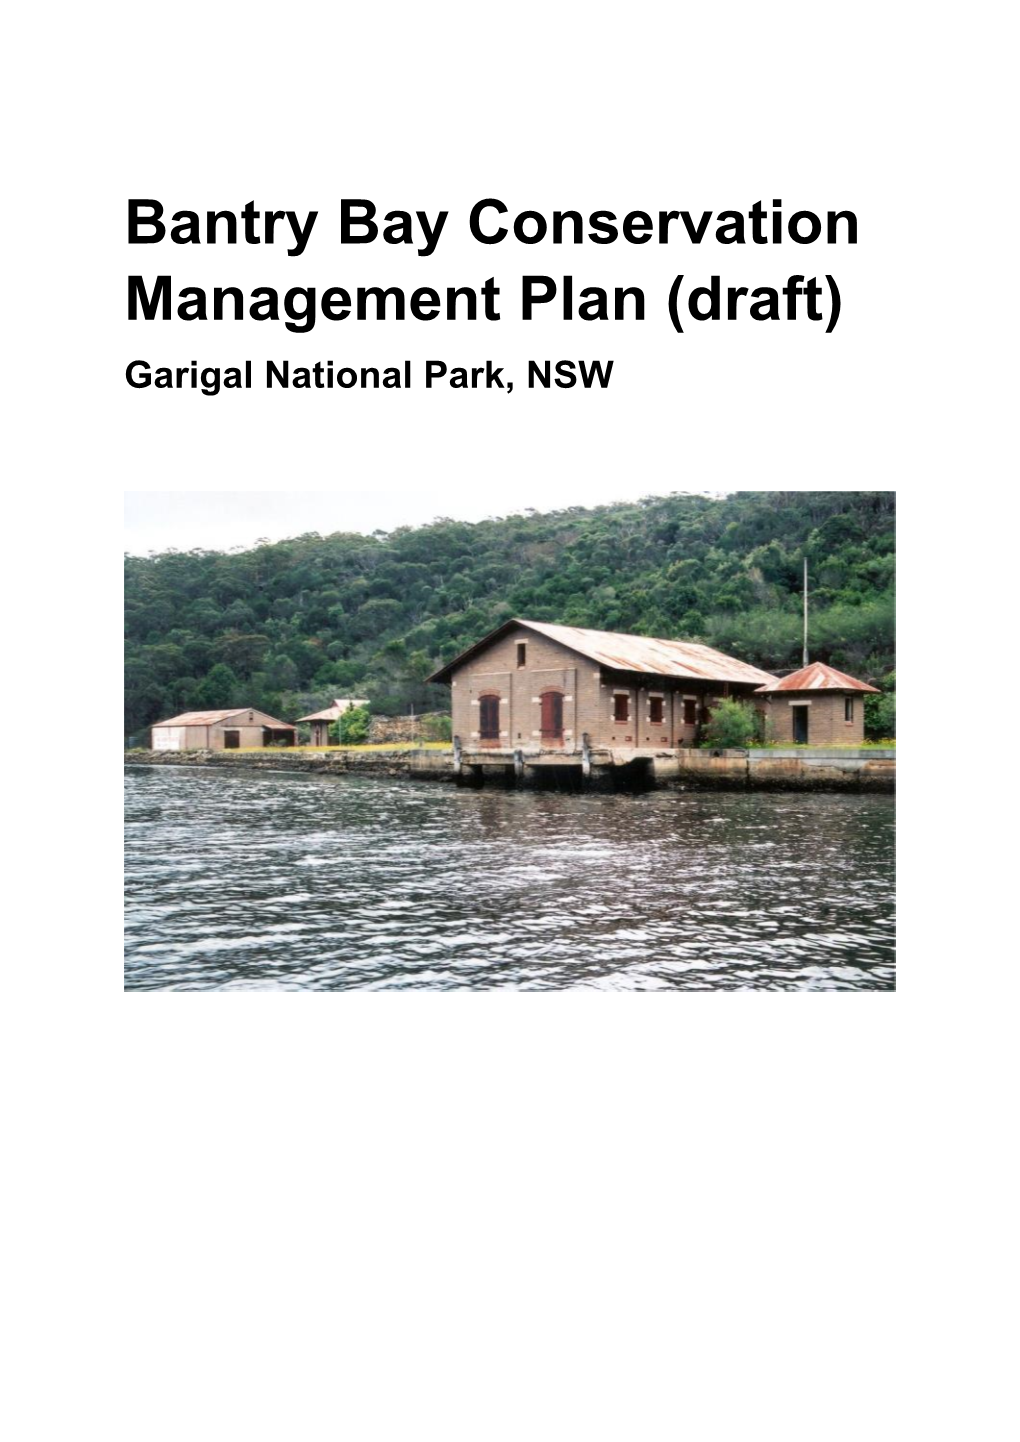 Bantry Bay Conservation Management Plan: Draft